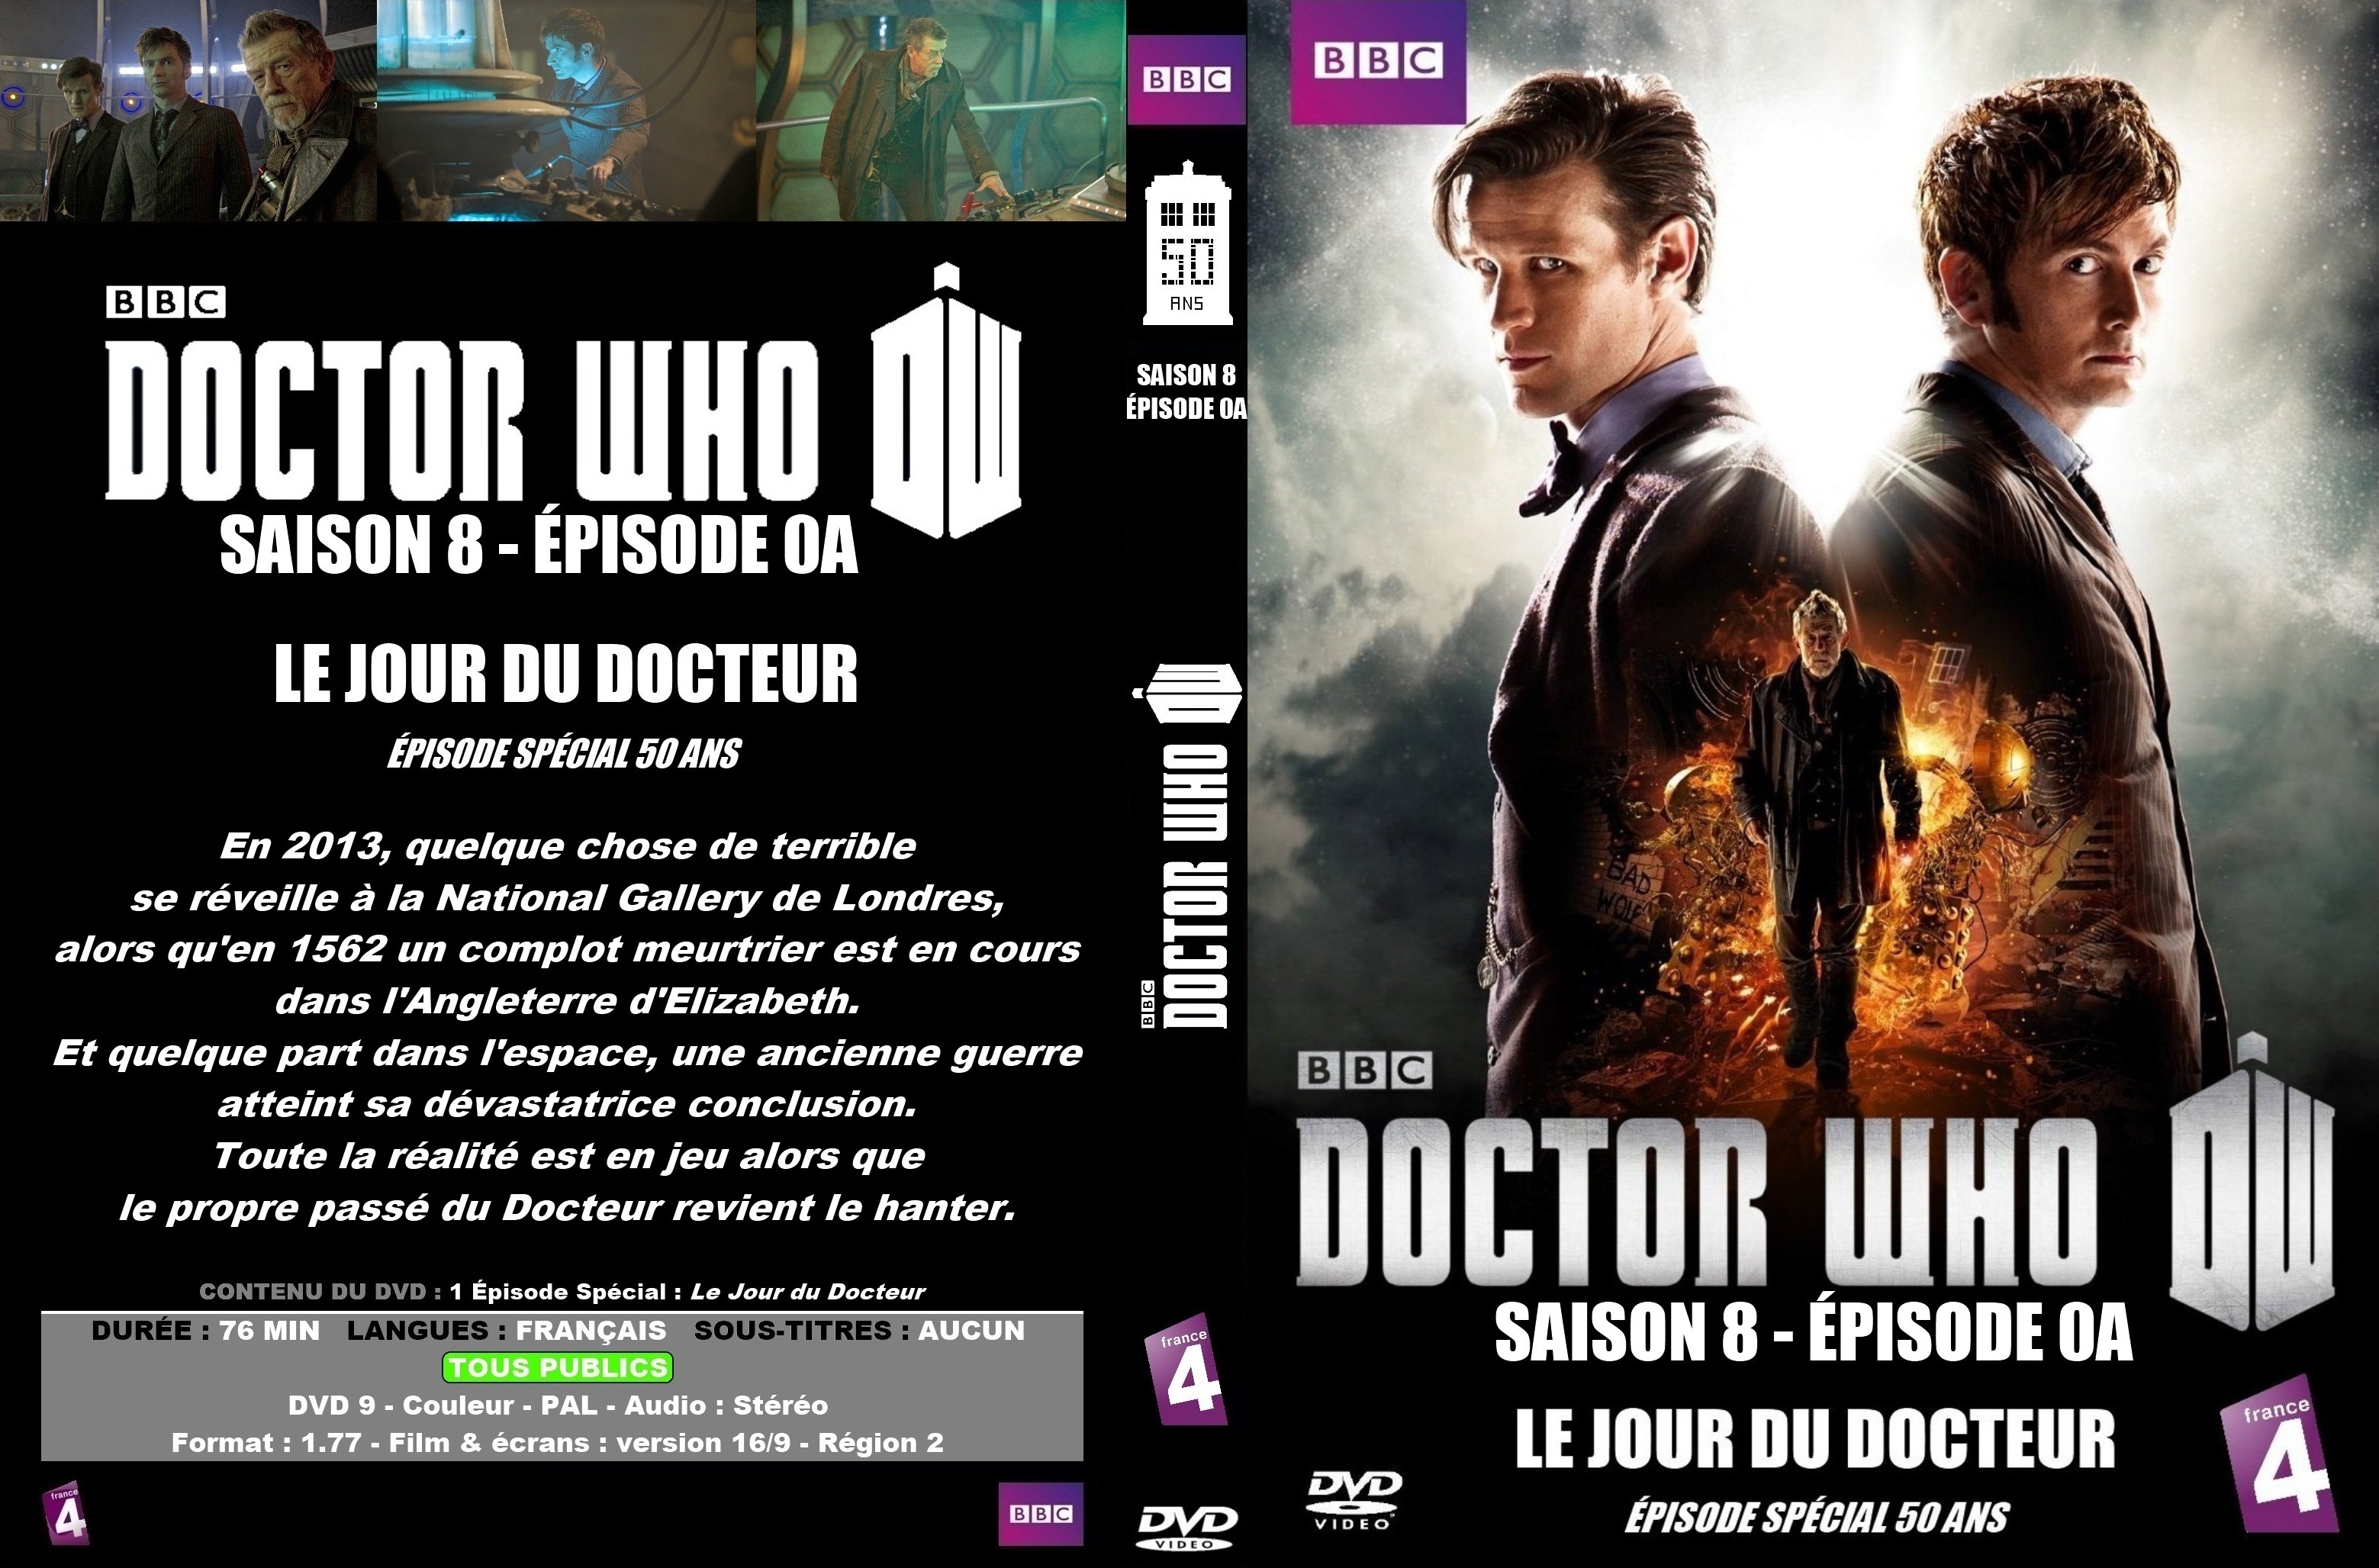 Jaquette DVD Doctor Who Saison 8 Episode 0A custom